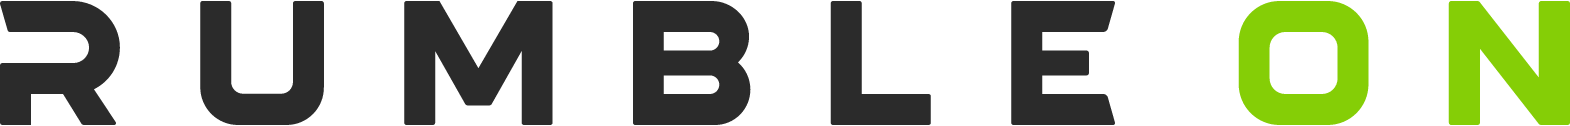 RumbleON
 logo large (transparent PNG)